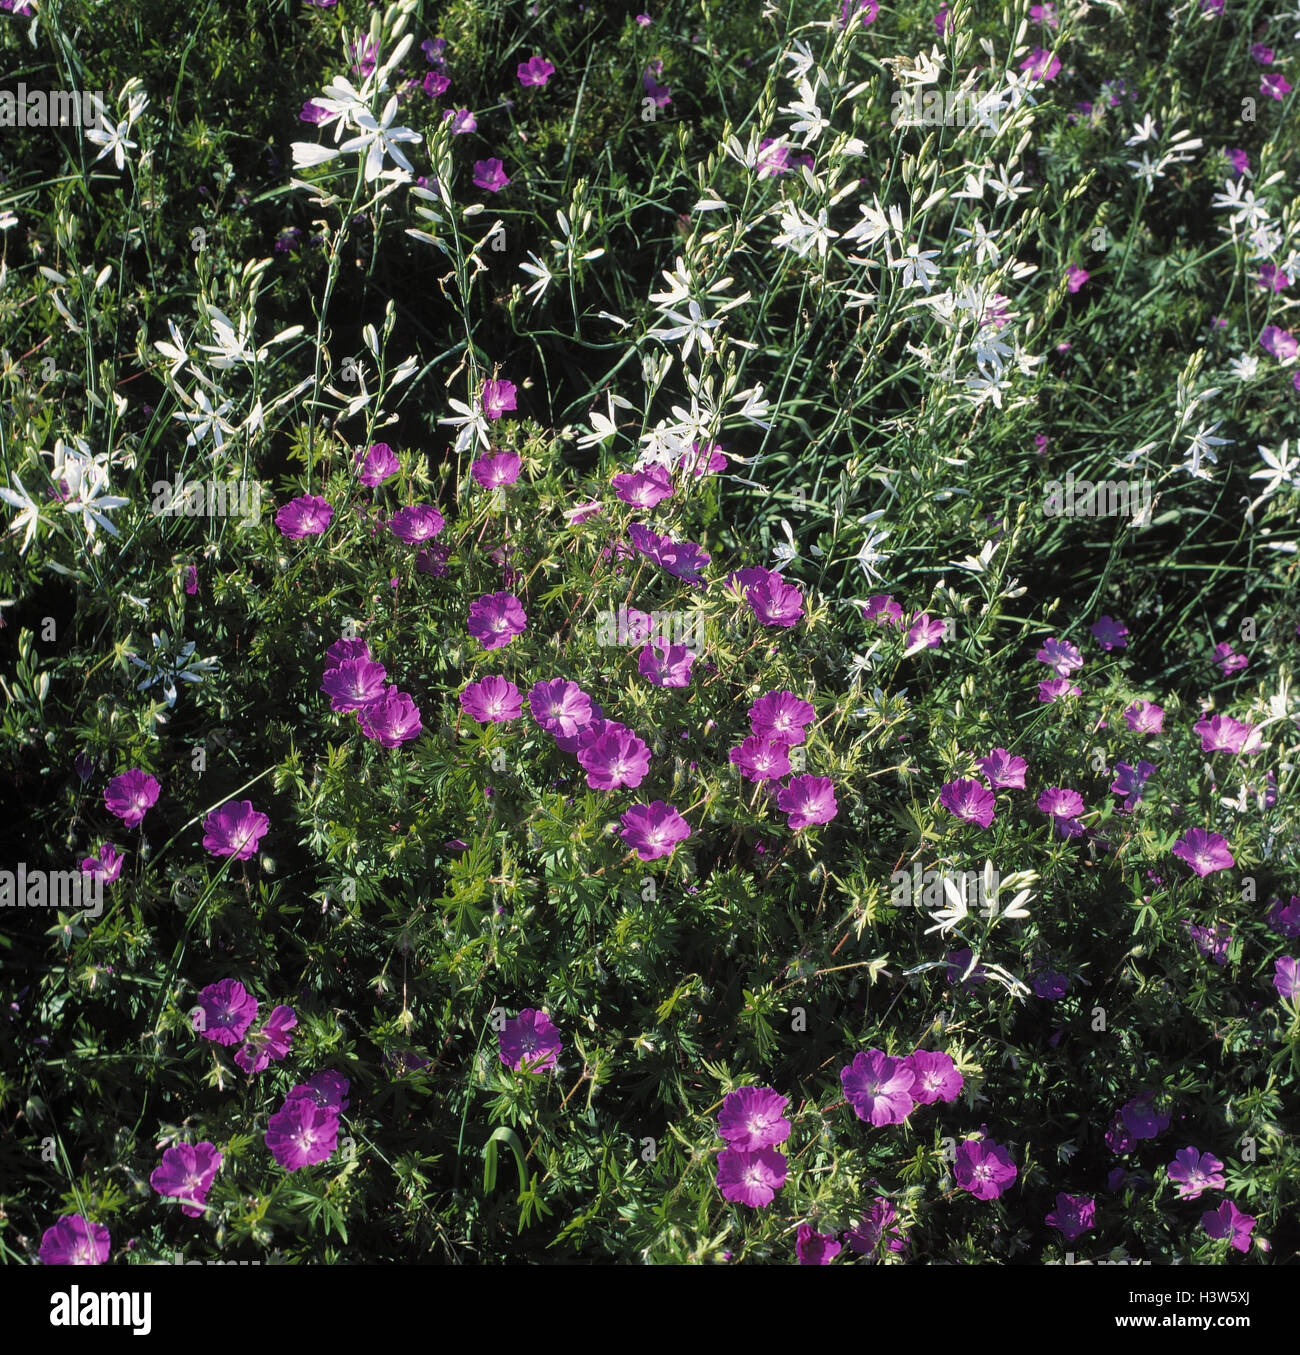 Bec cigogne rouge-sang, geranium sanguineum, Astlose lily Anthericum liliago herbe, Blutstorchschnabel, Stork beak, herbe, rouge-sang, Lily, près de astlose Banque D'Images